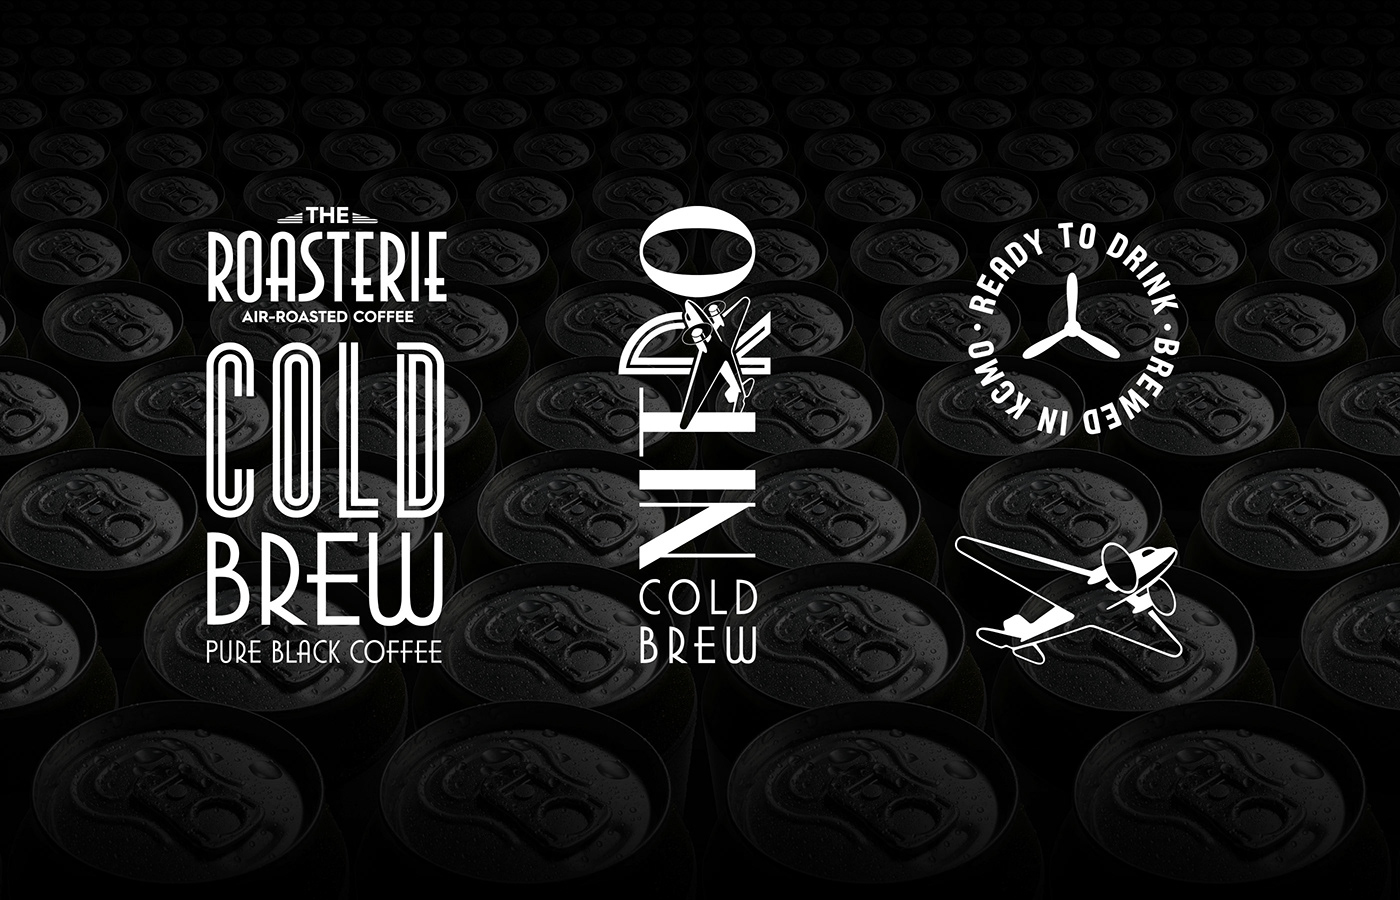 Coffee coffee packaging coffee branding coffee company packaging design branding  Cold Brew Cold Brew Coffee The Roasterie Coffee Design